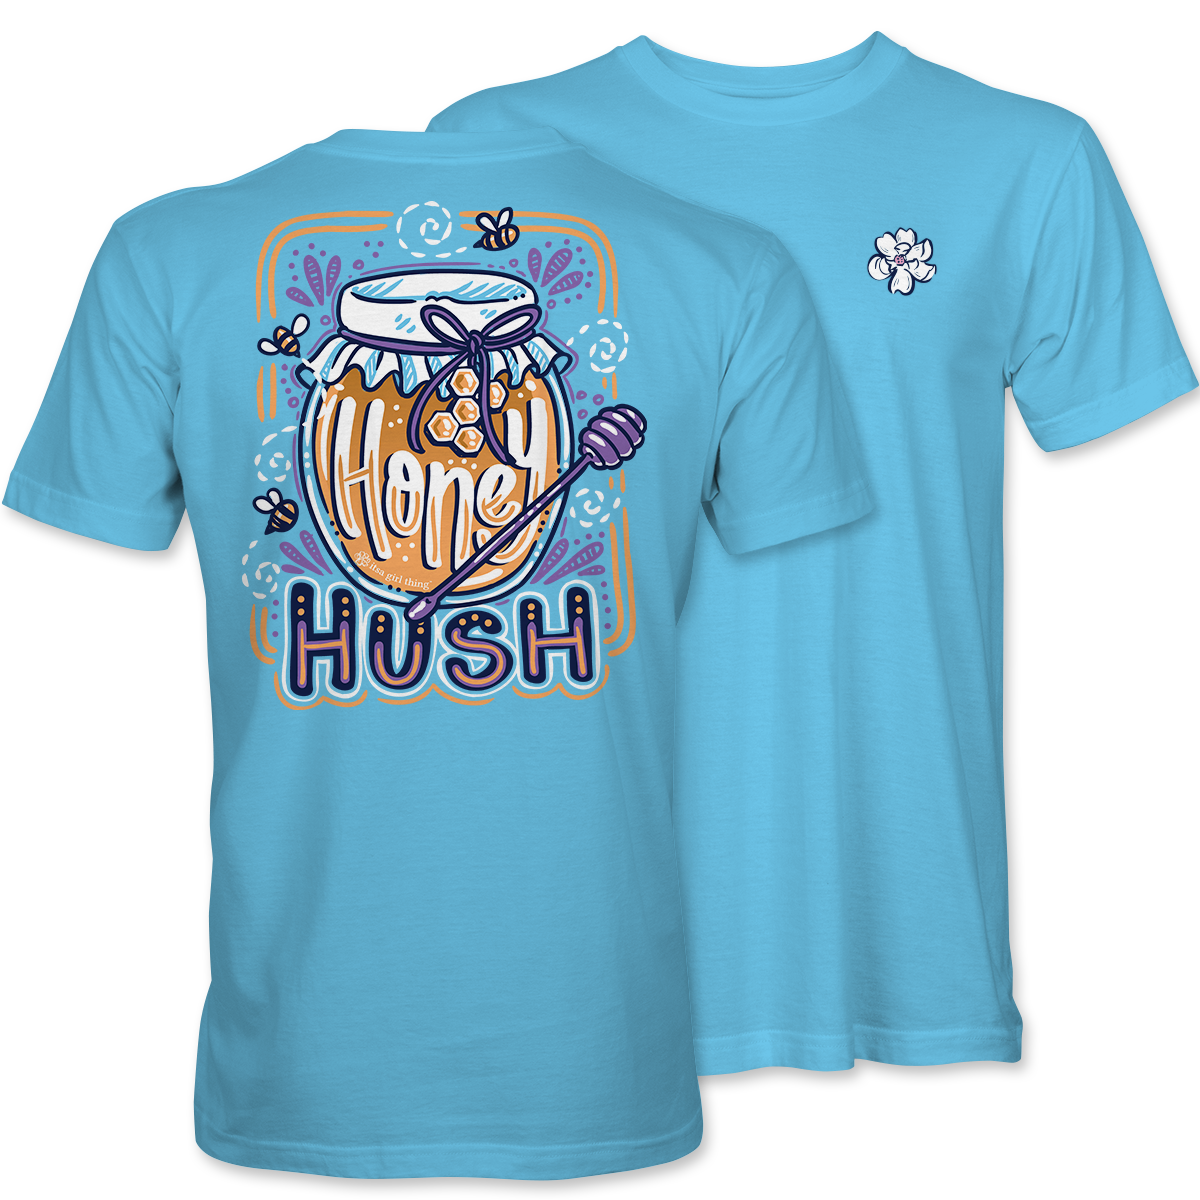 Honey Hush - Southern Sass T-Shirt